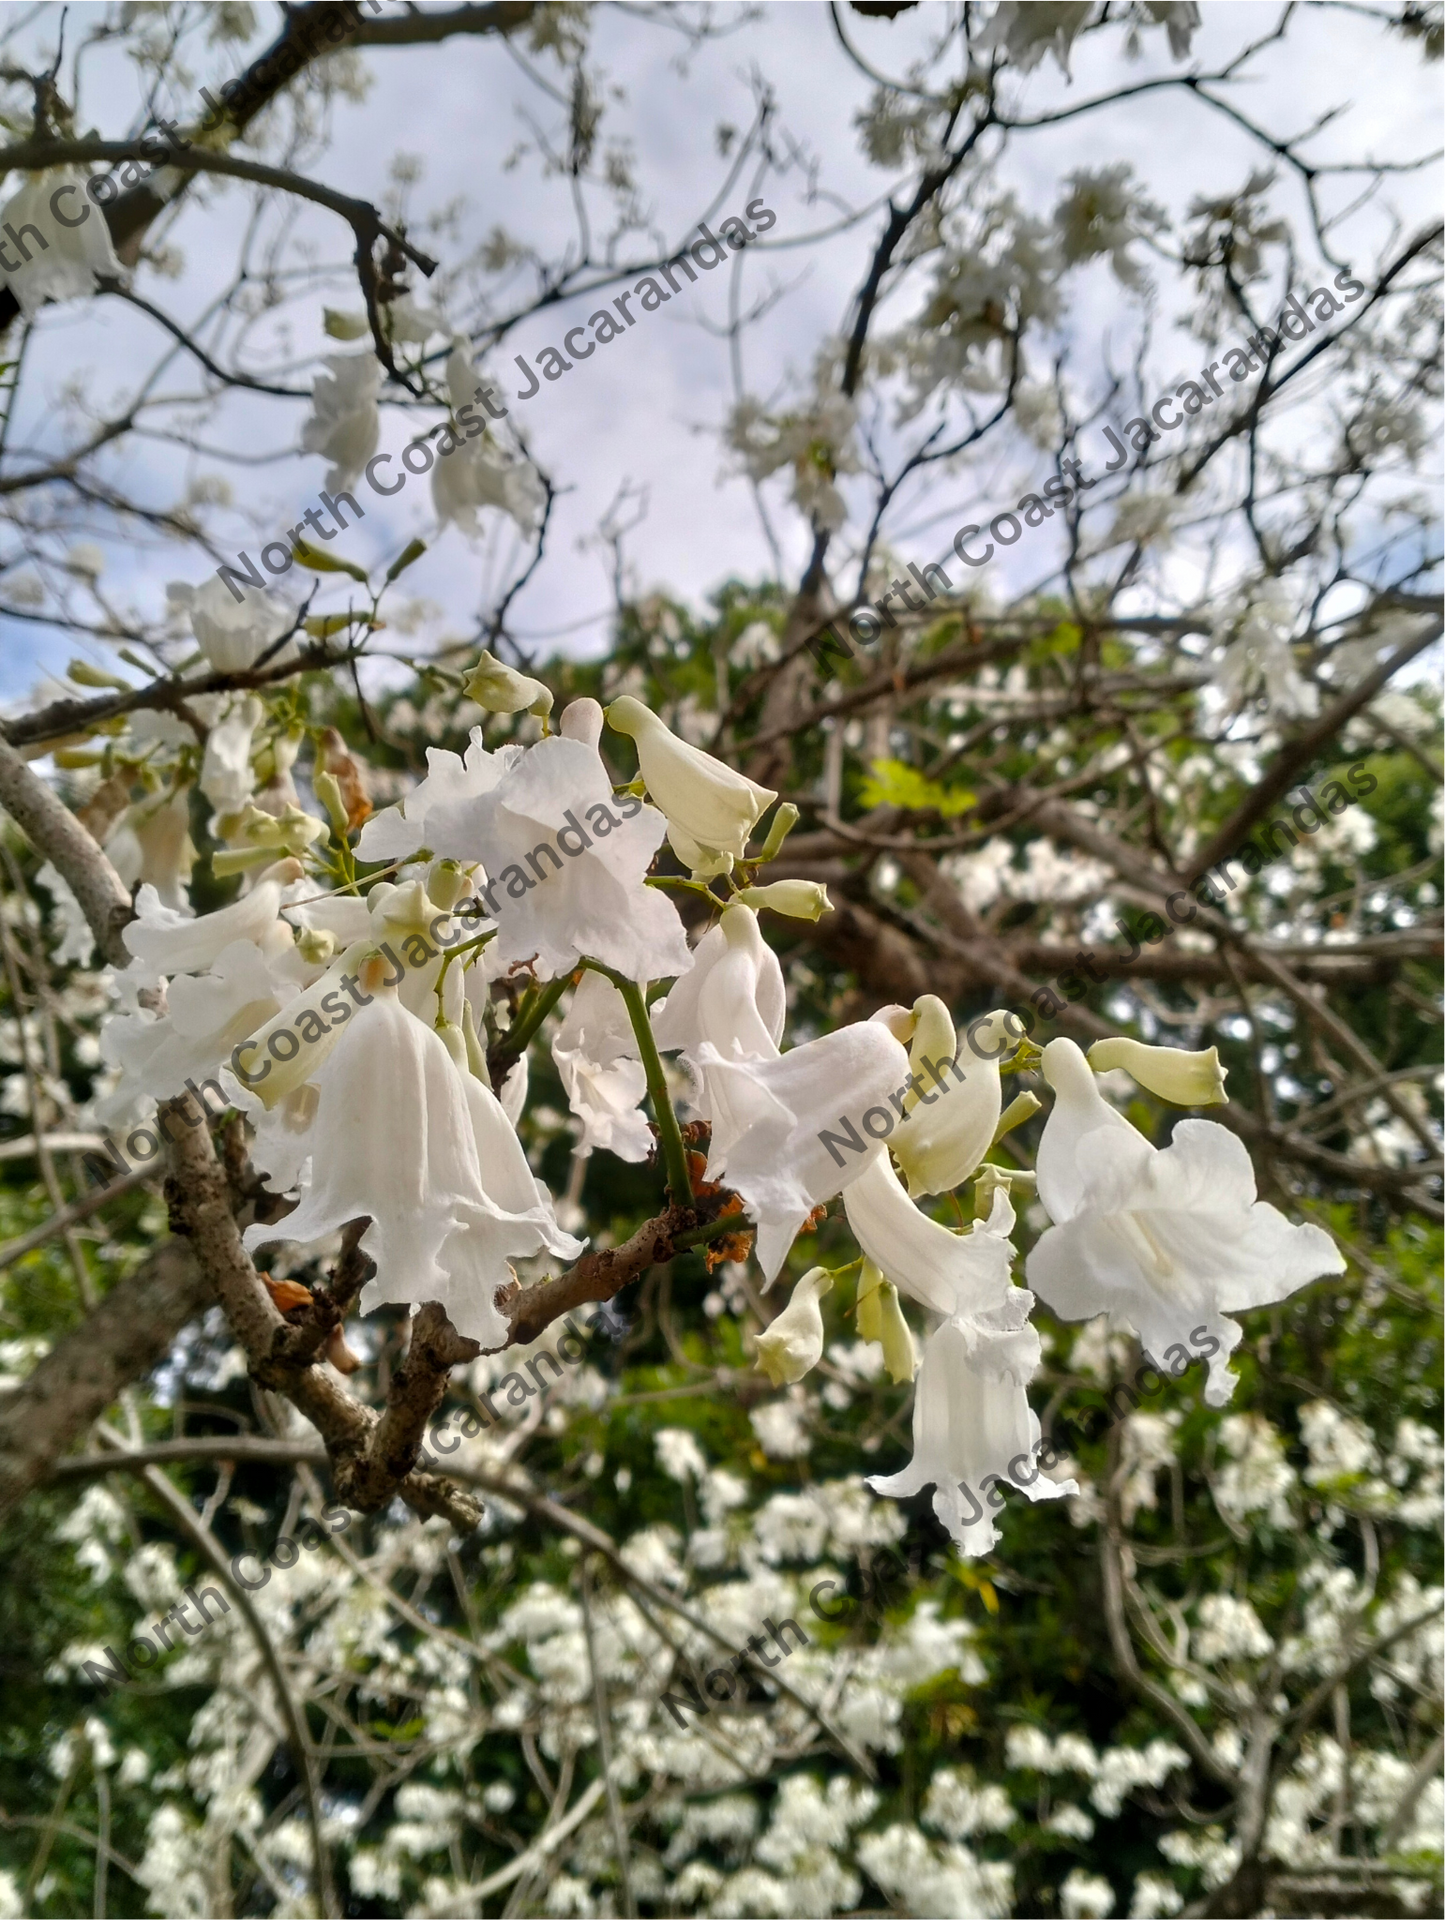 White Jacaranda tree grafted - Jacaranda mimosifolia alba Free Express Shipping